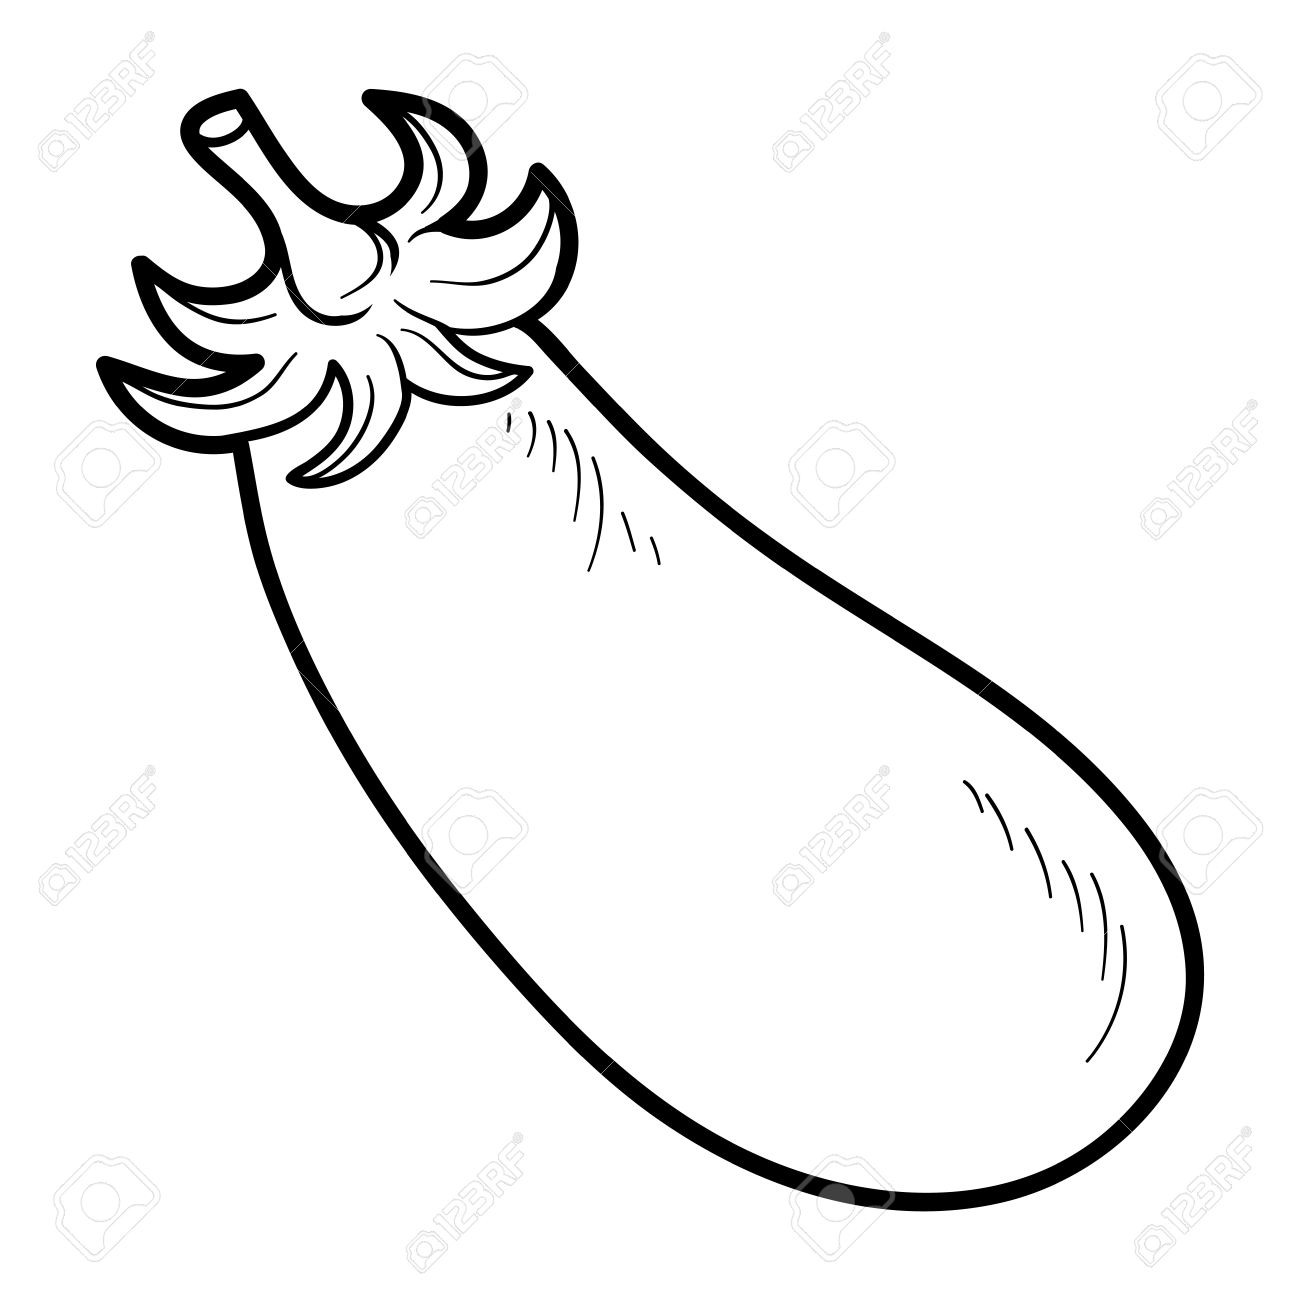 eggplant clipart sketch